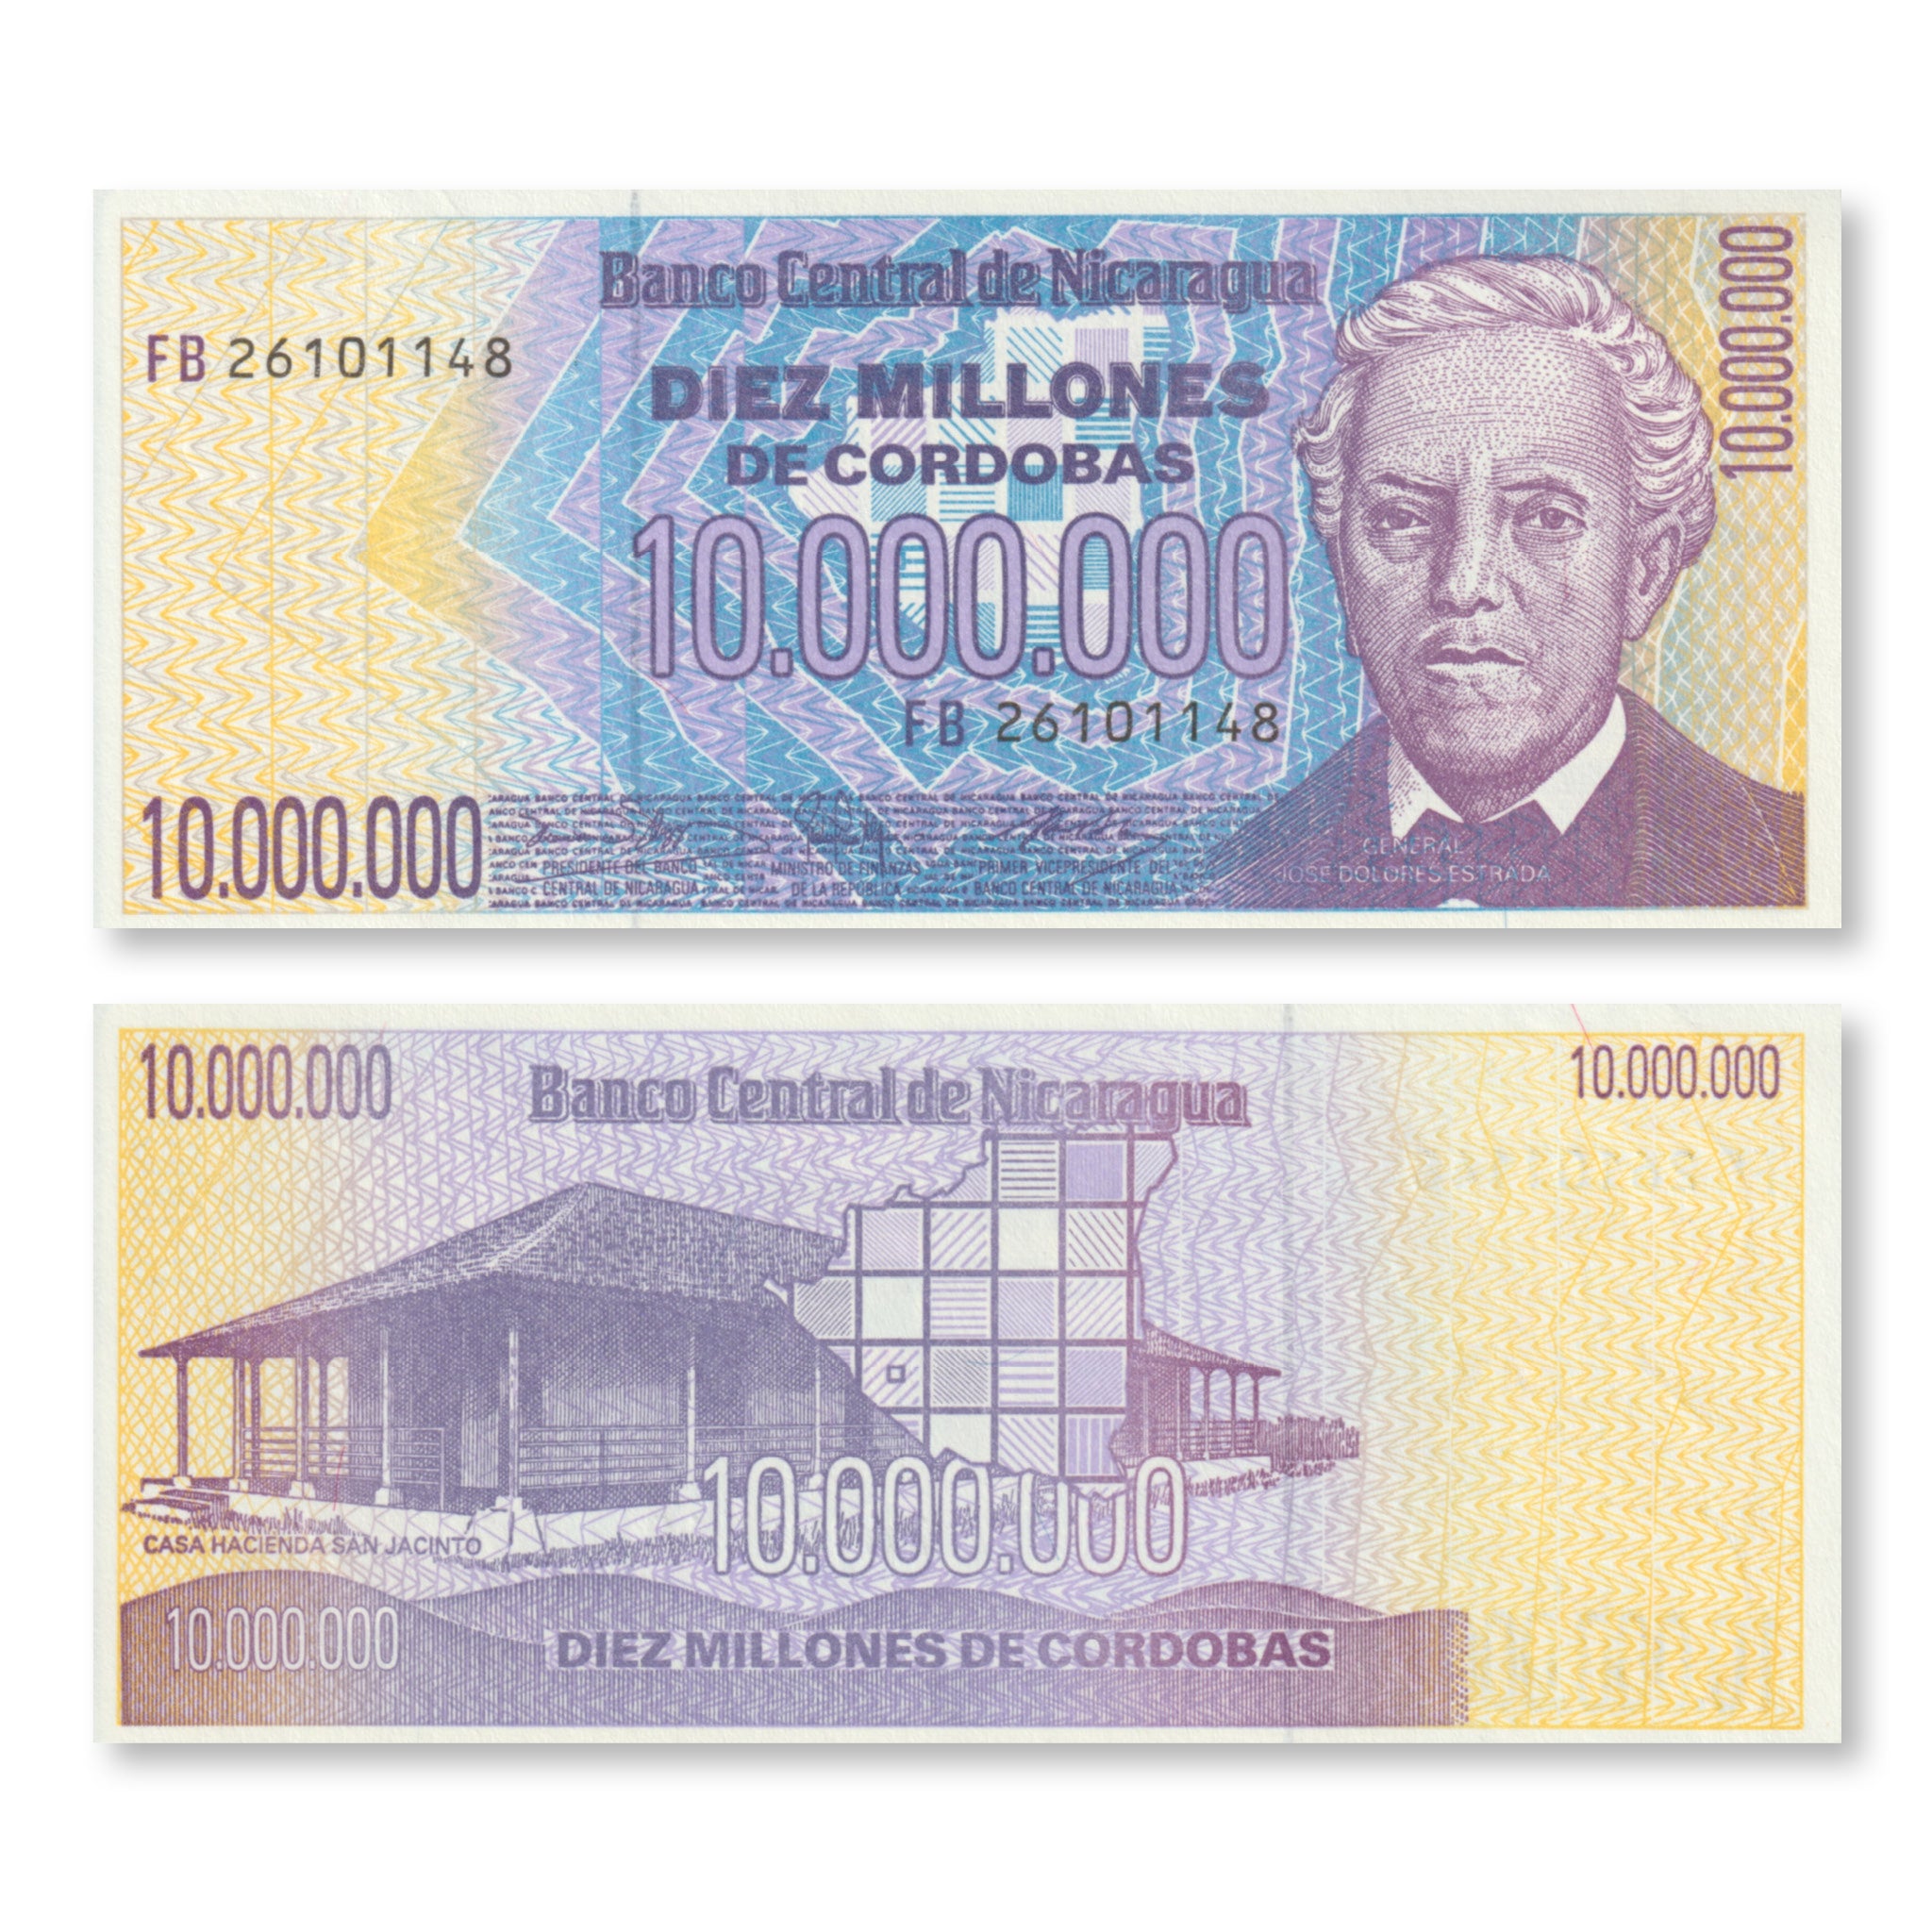 Nicaragua 10 Million Córdobas, 1990, B460a, P166a, UNC - Robert's World Money - World Banknotes